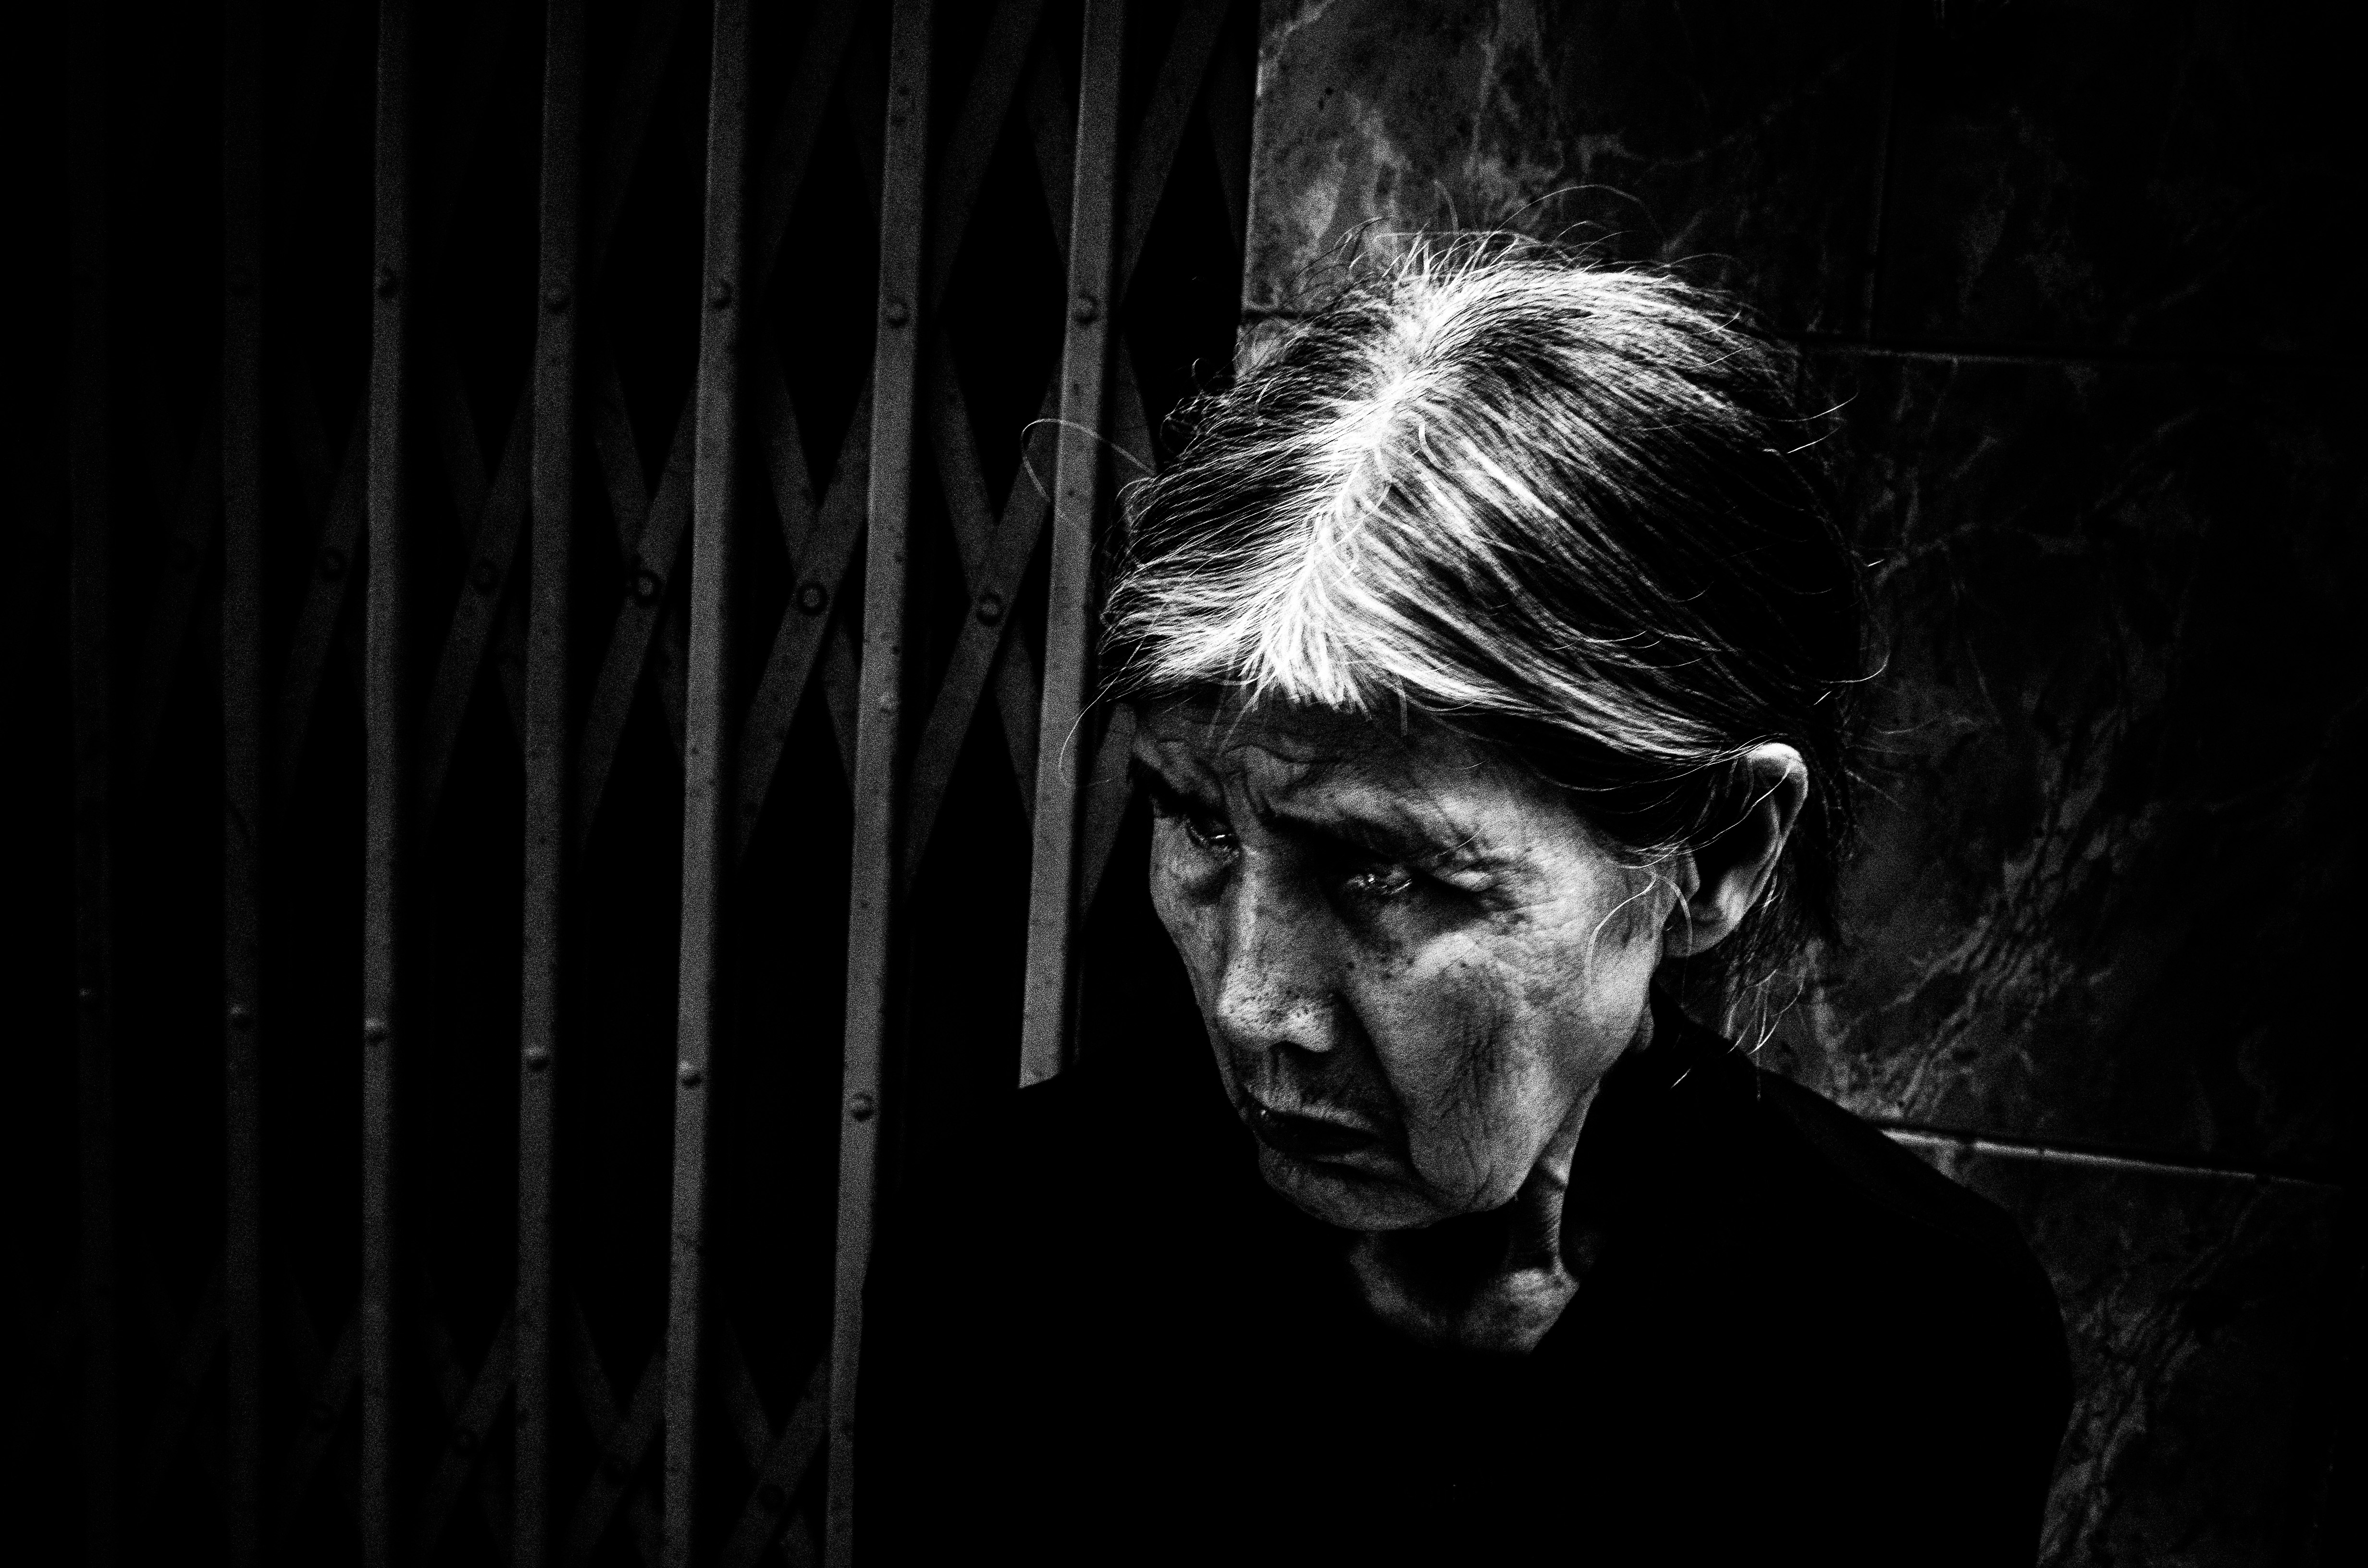 eric kim street photography hanoi - old woman